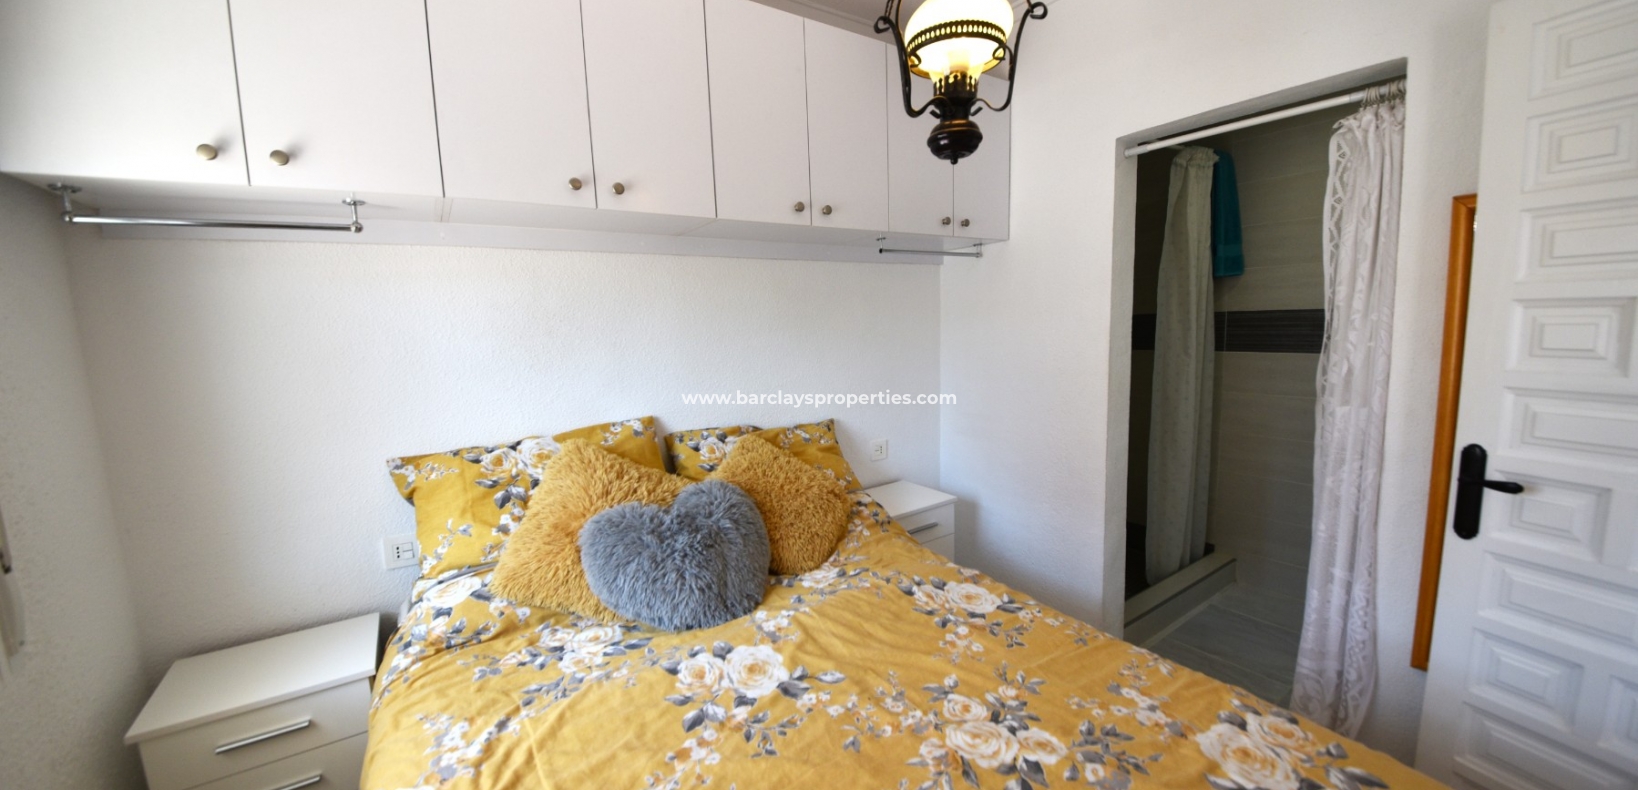 Bedroom - Terraced Property for sale in La Marina Spain